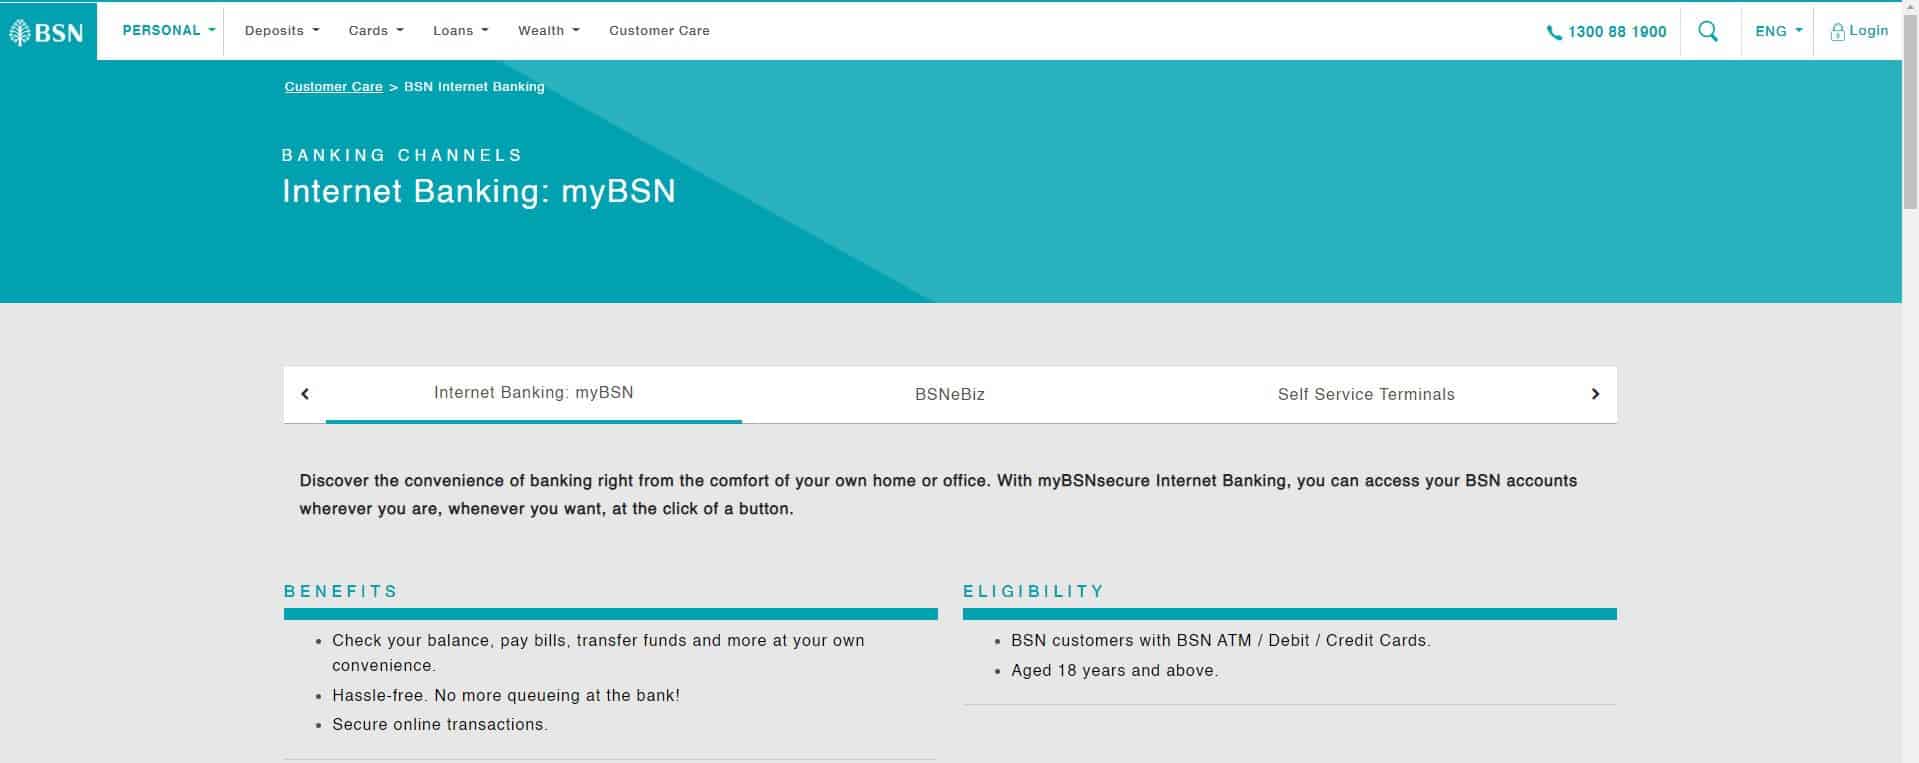 Laman Web Rasmi Bank BSN